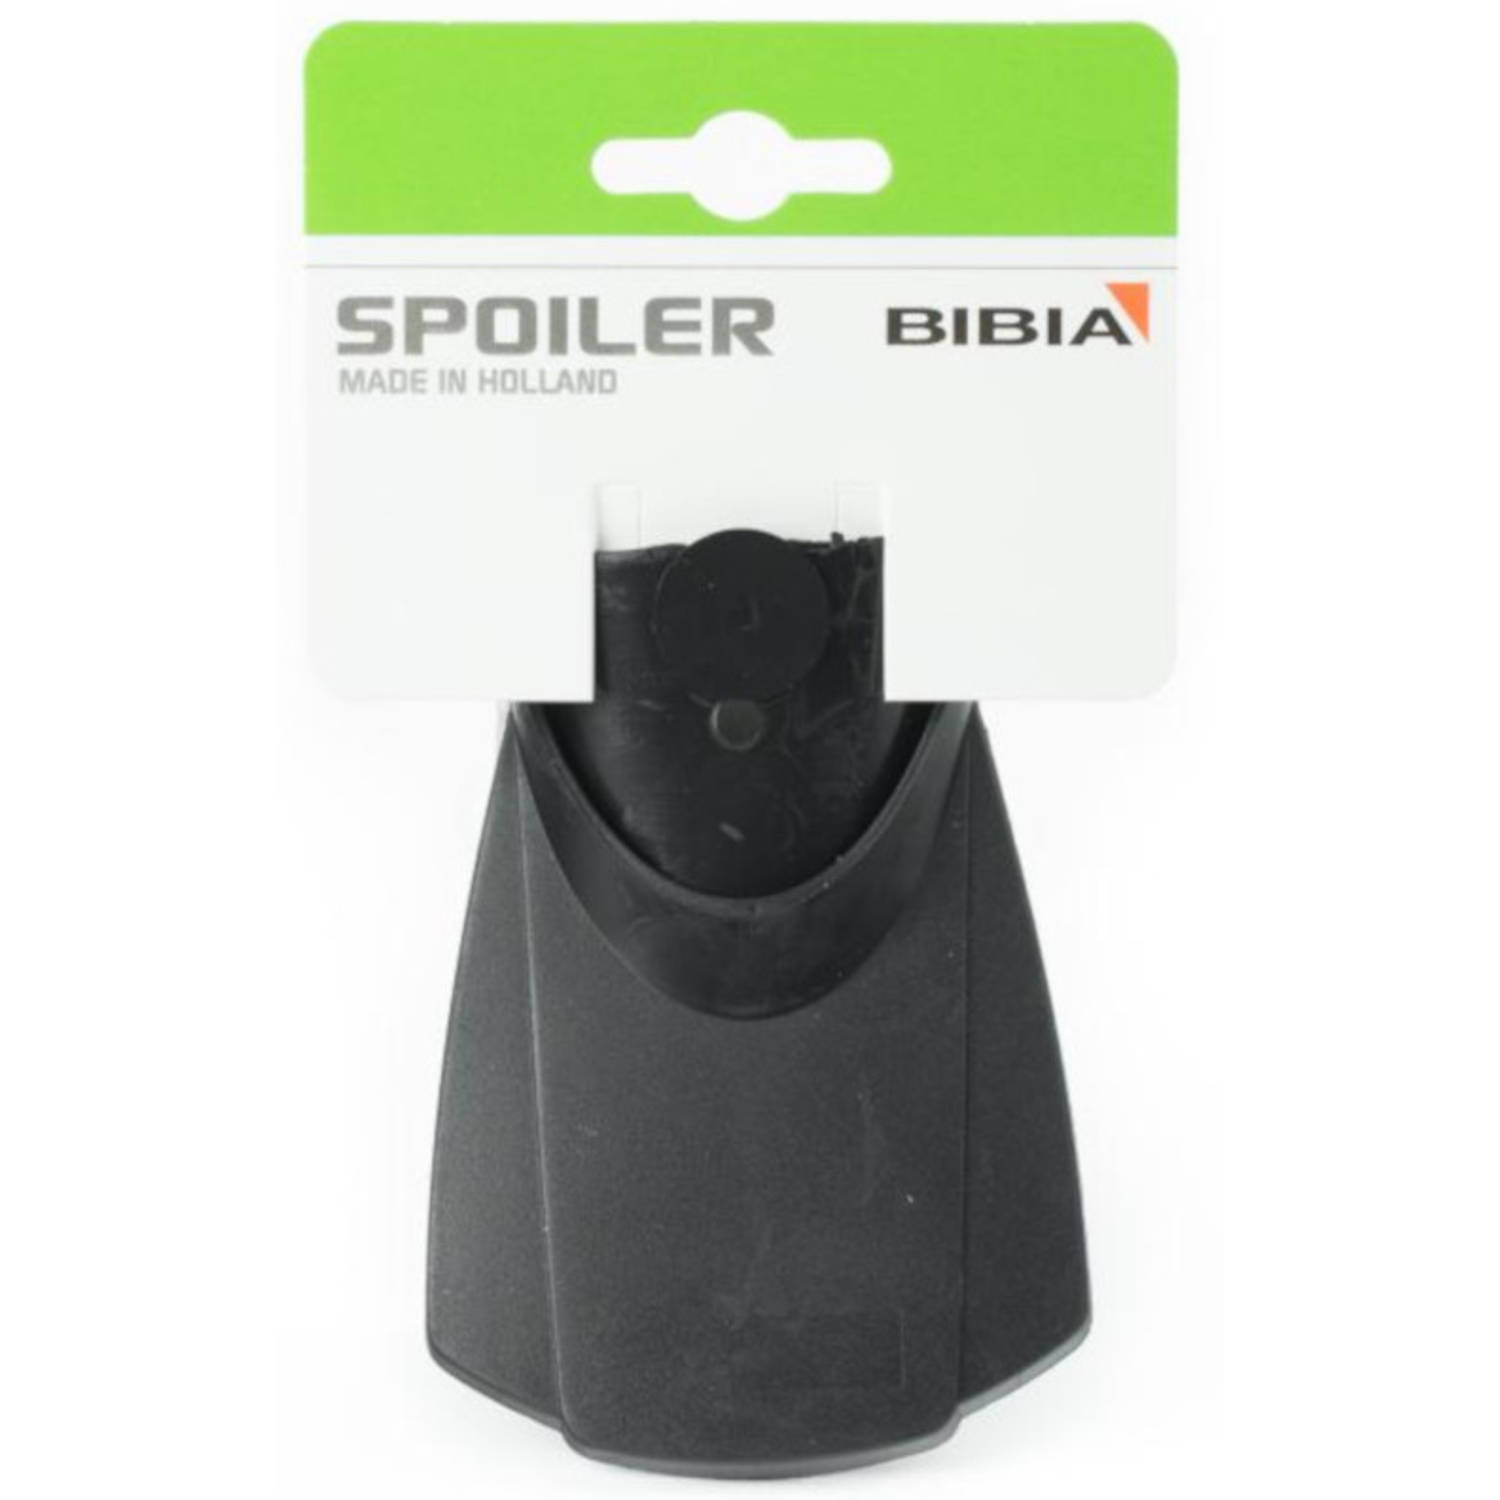 Bibia spoiler Sport 55mm op krt